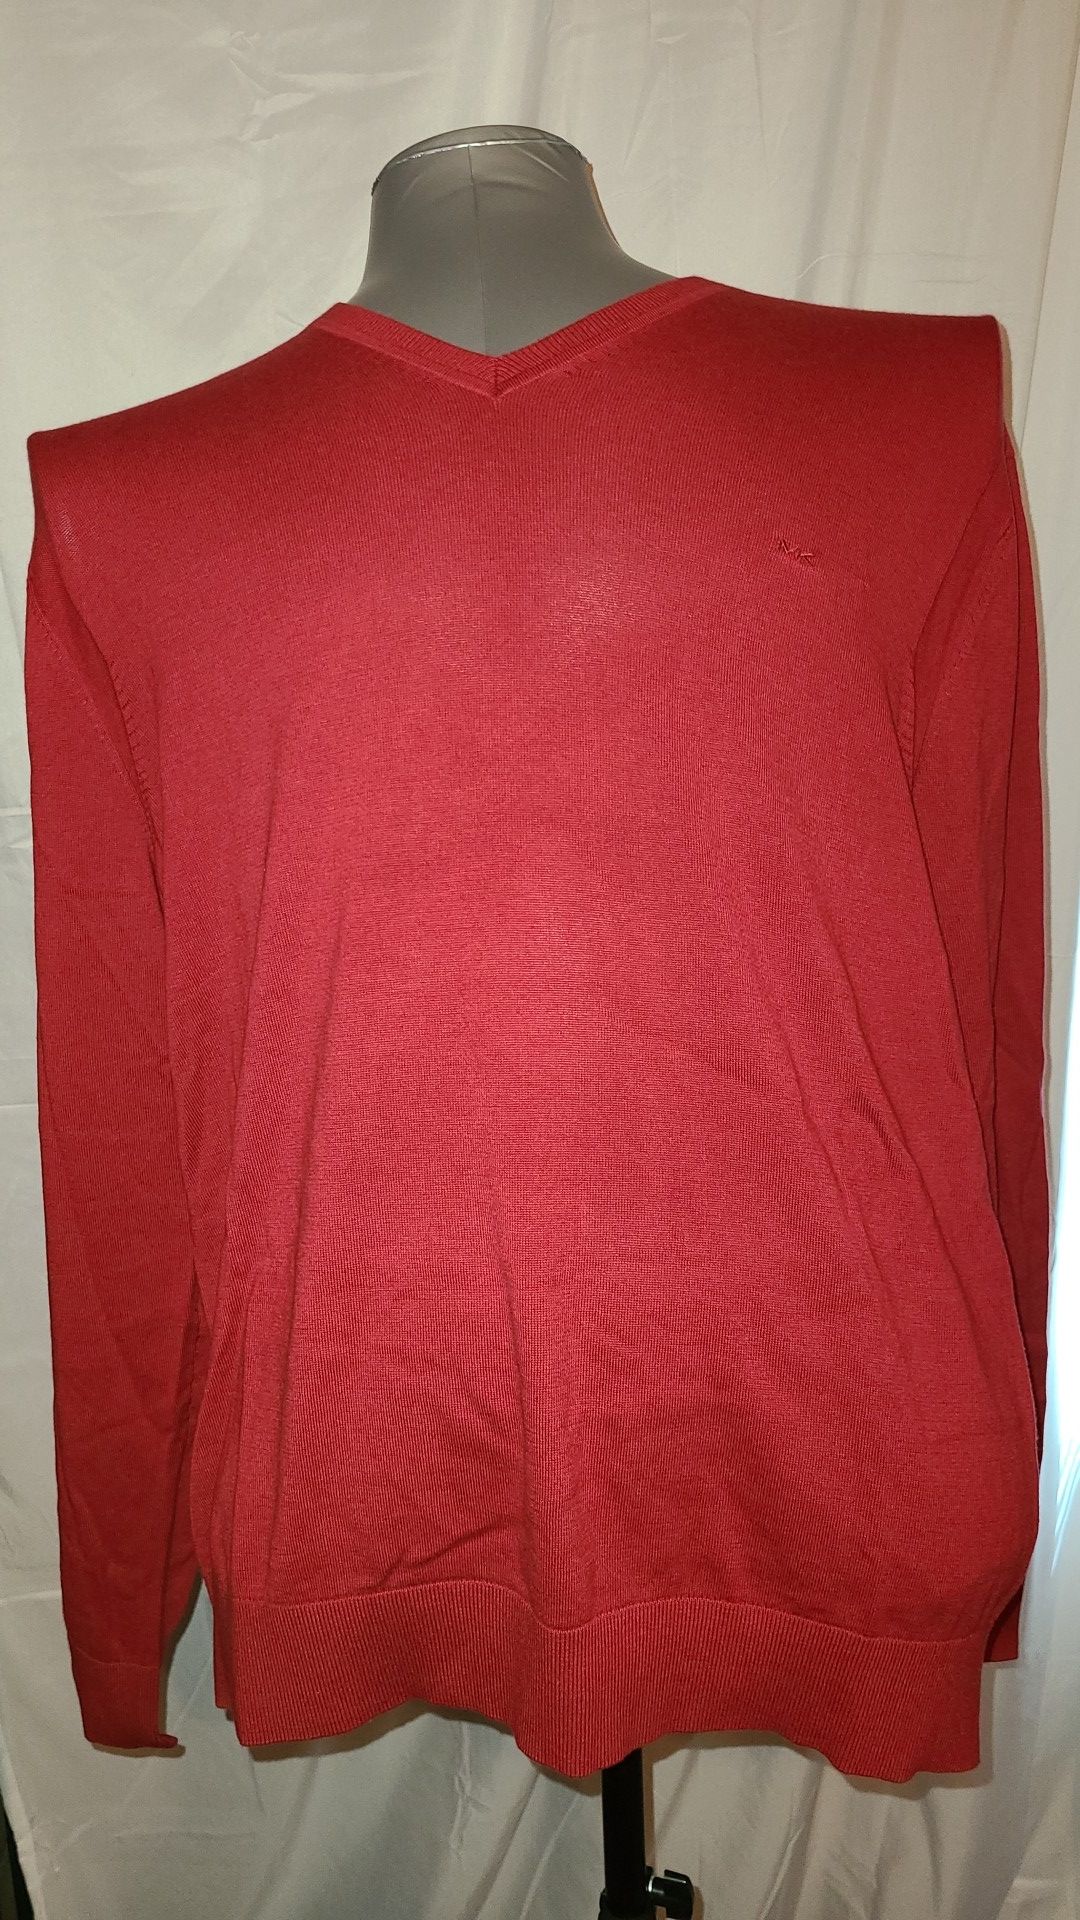 Michael Kors men's red sweater